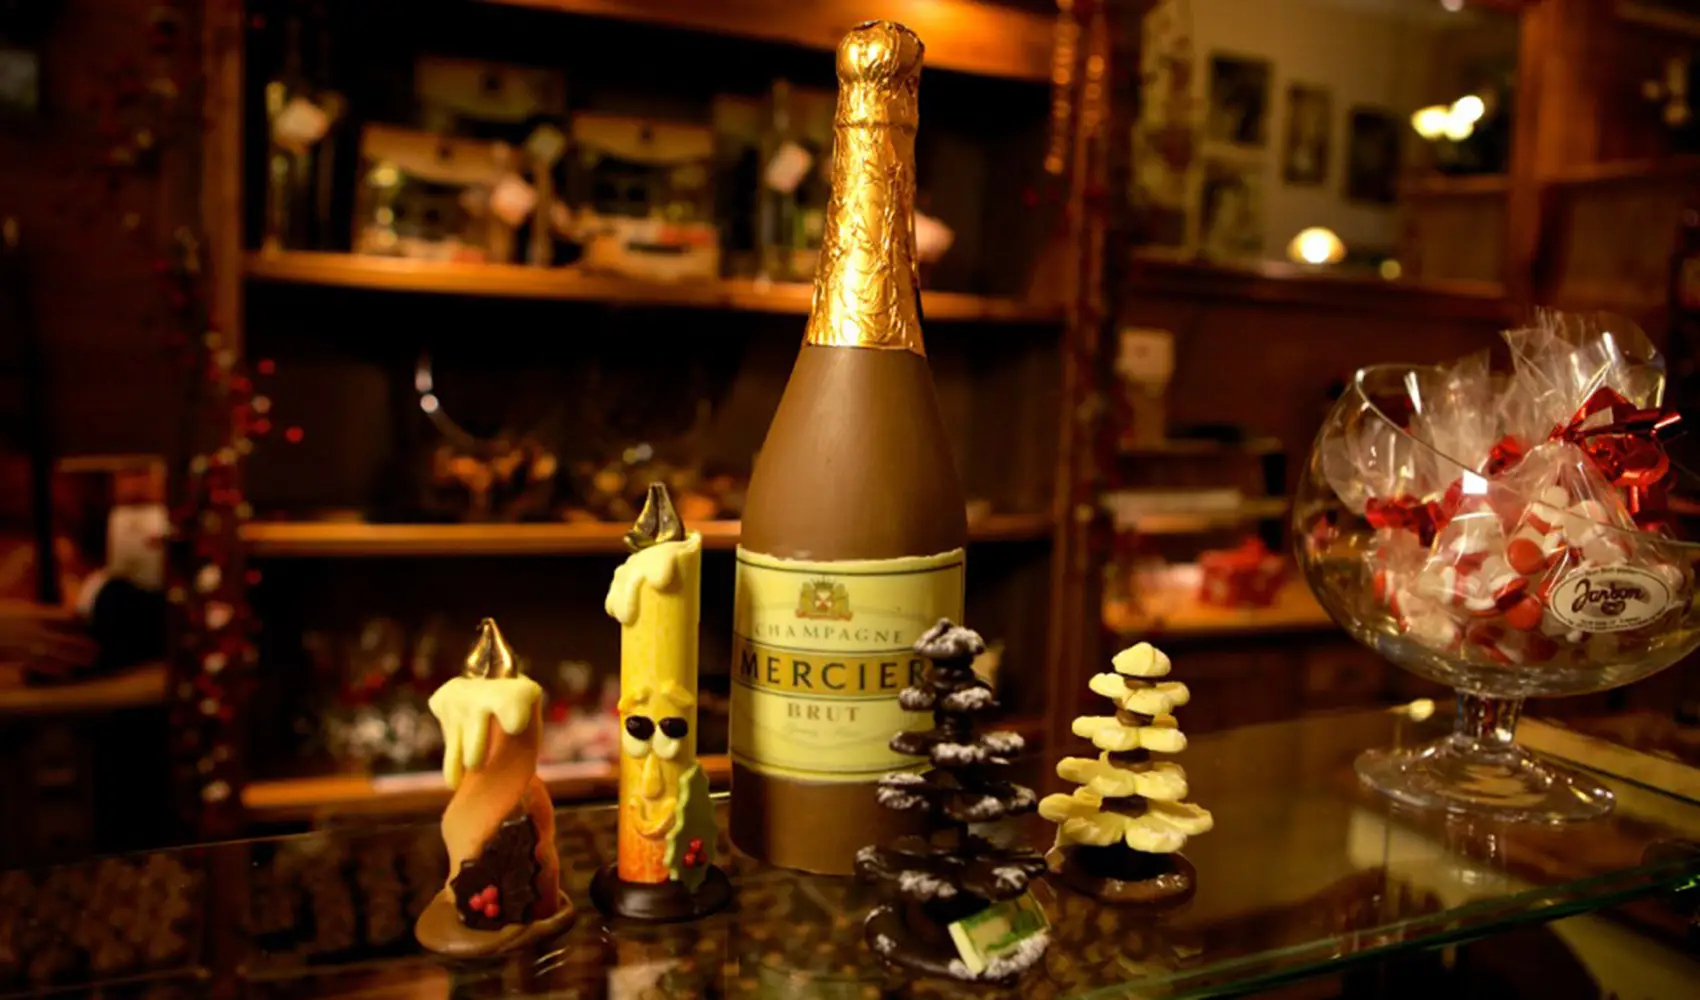 janson-kerstchocolade-champagnefles-verzameling-chocolade-1024x576 copy